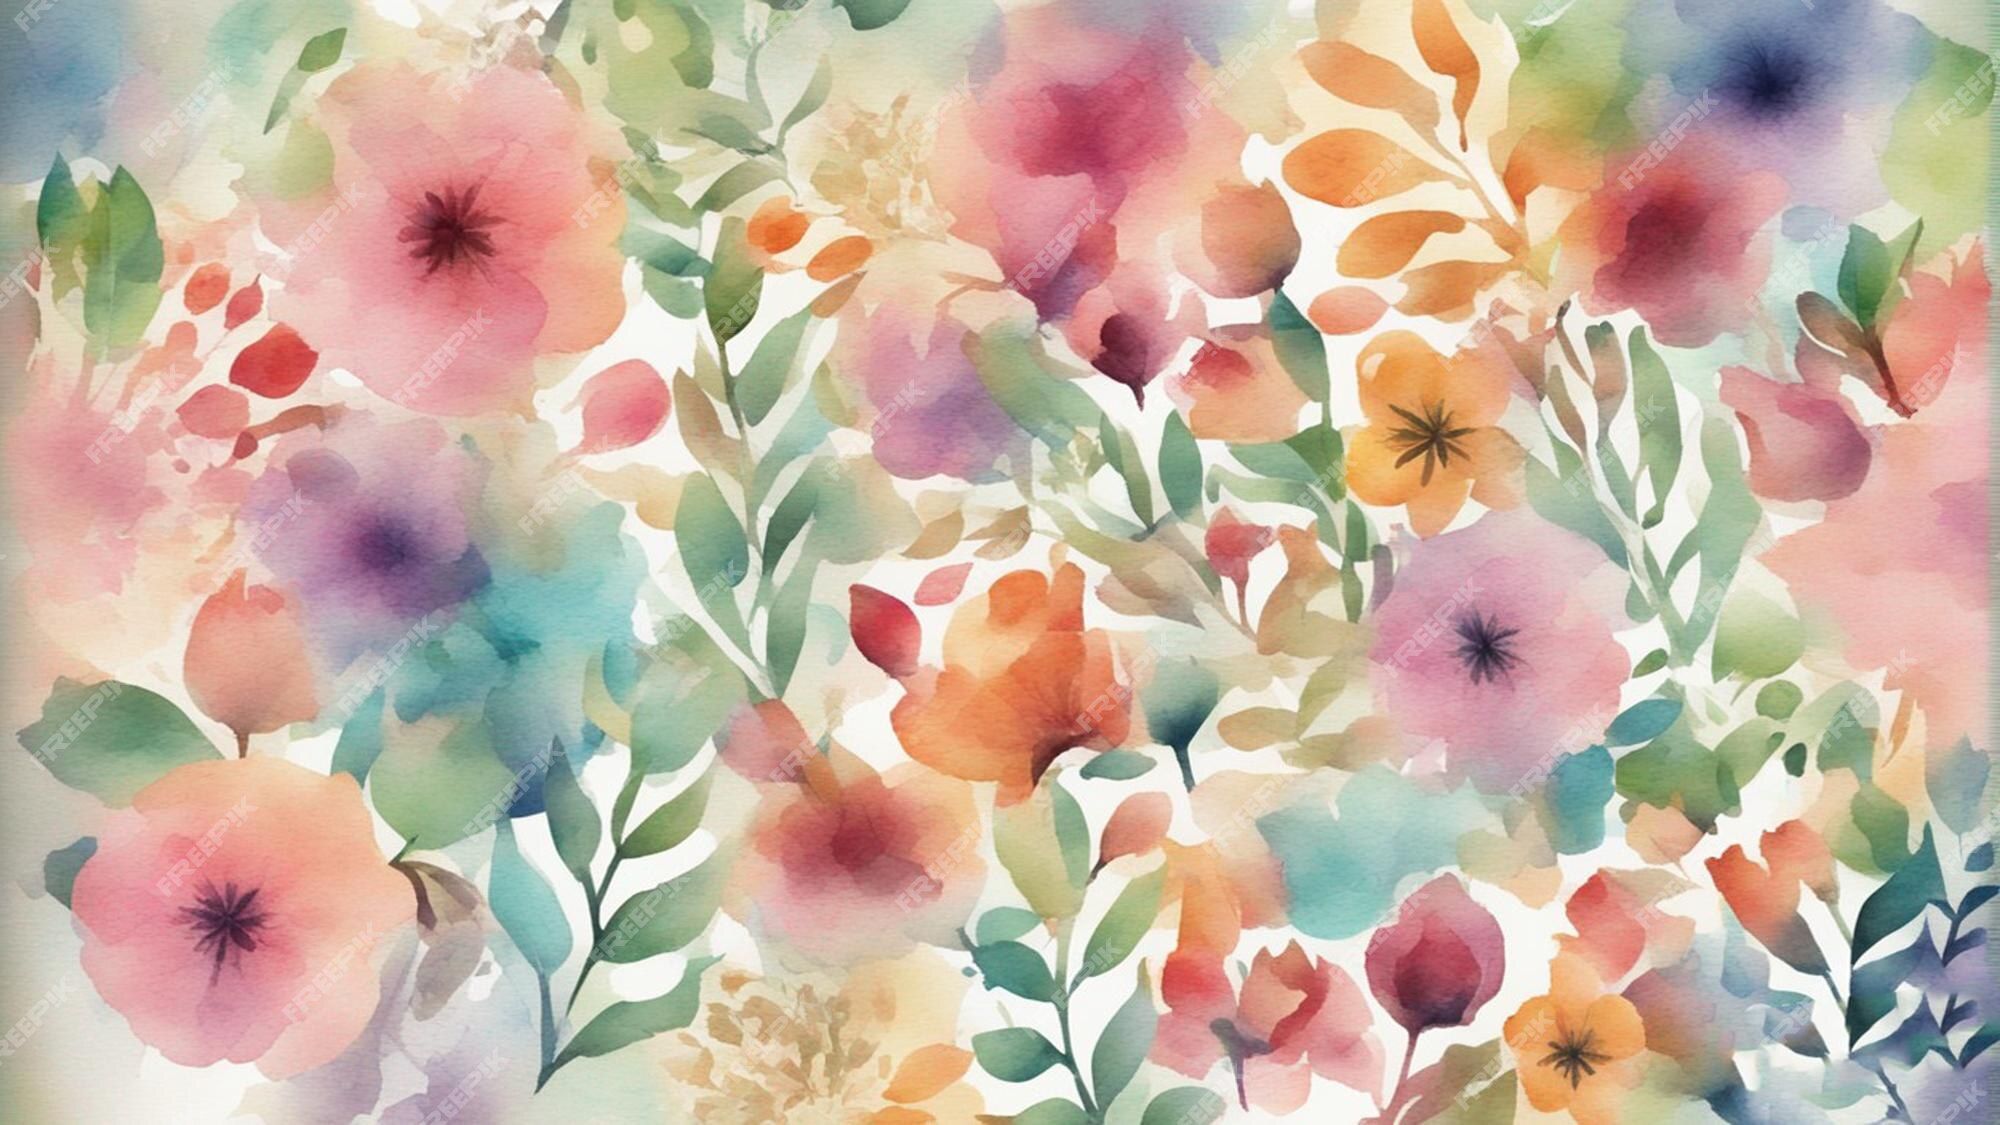 Watercolor Flowers Wallpaper Image